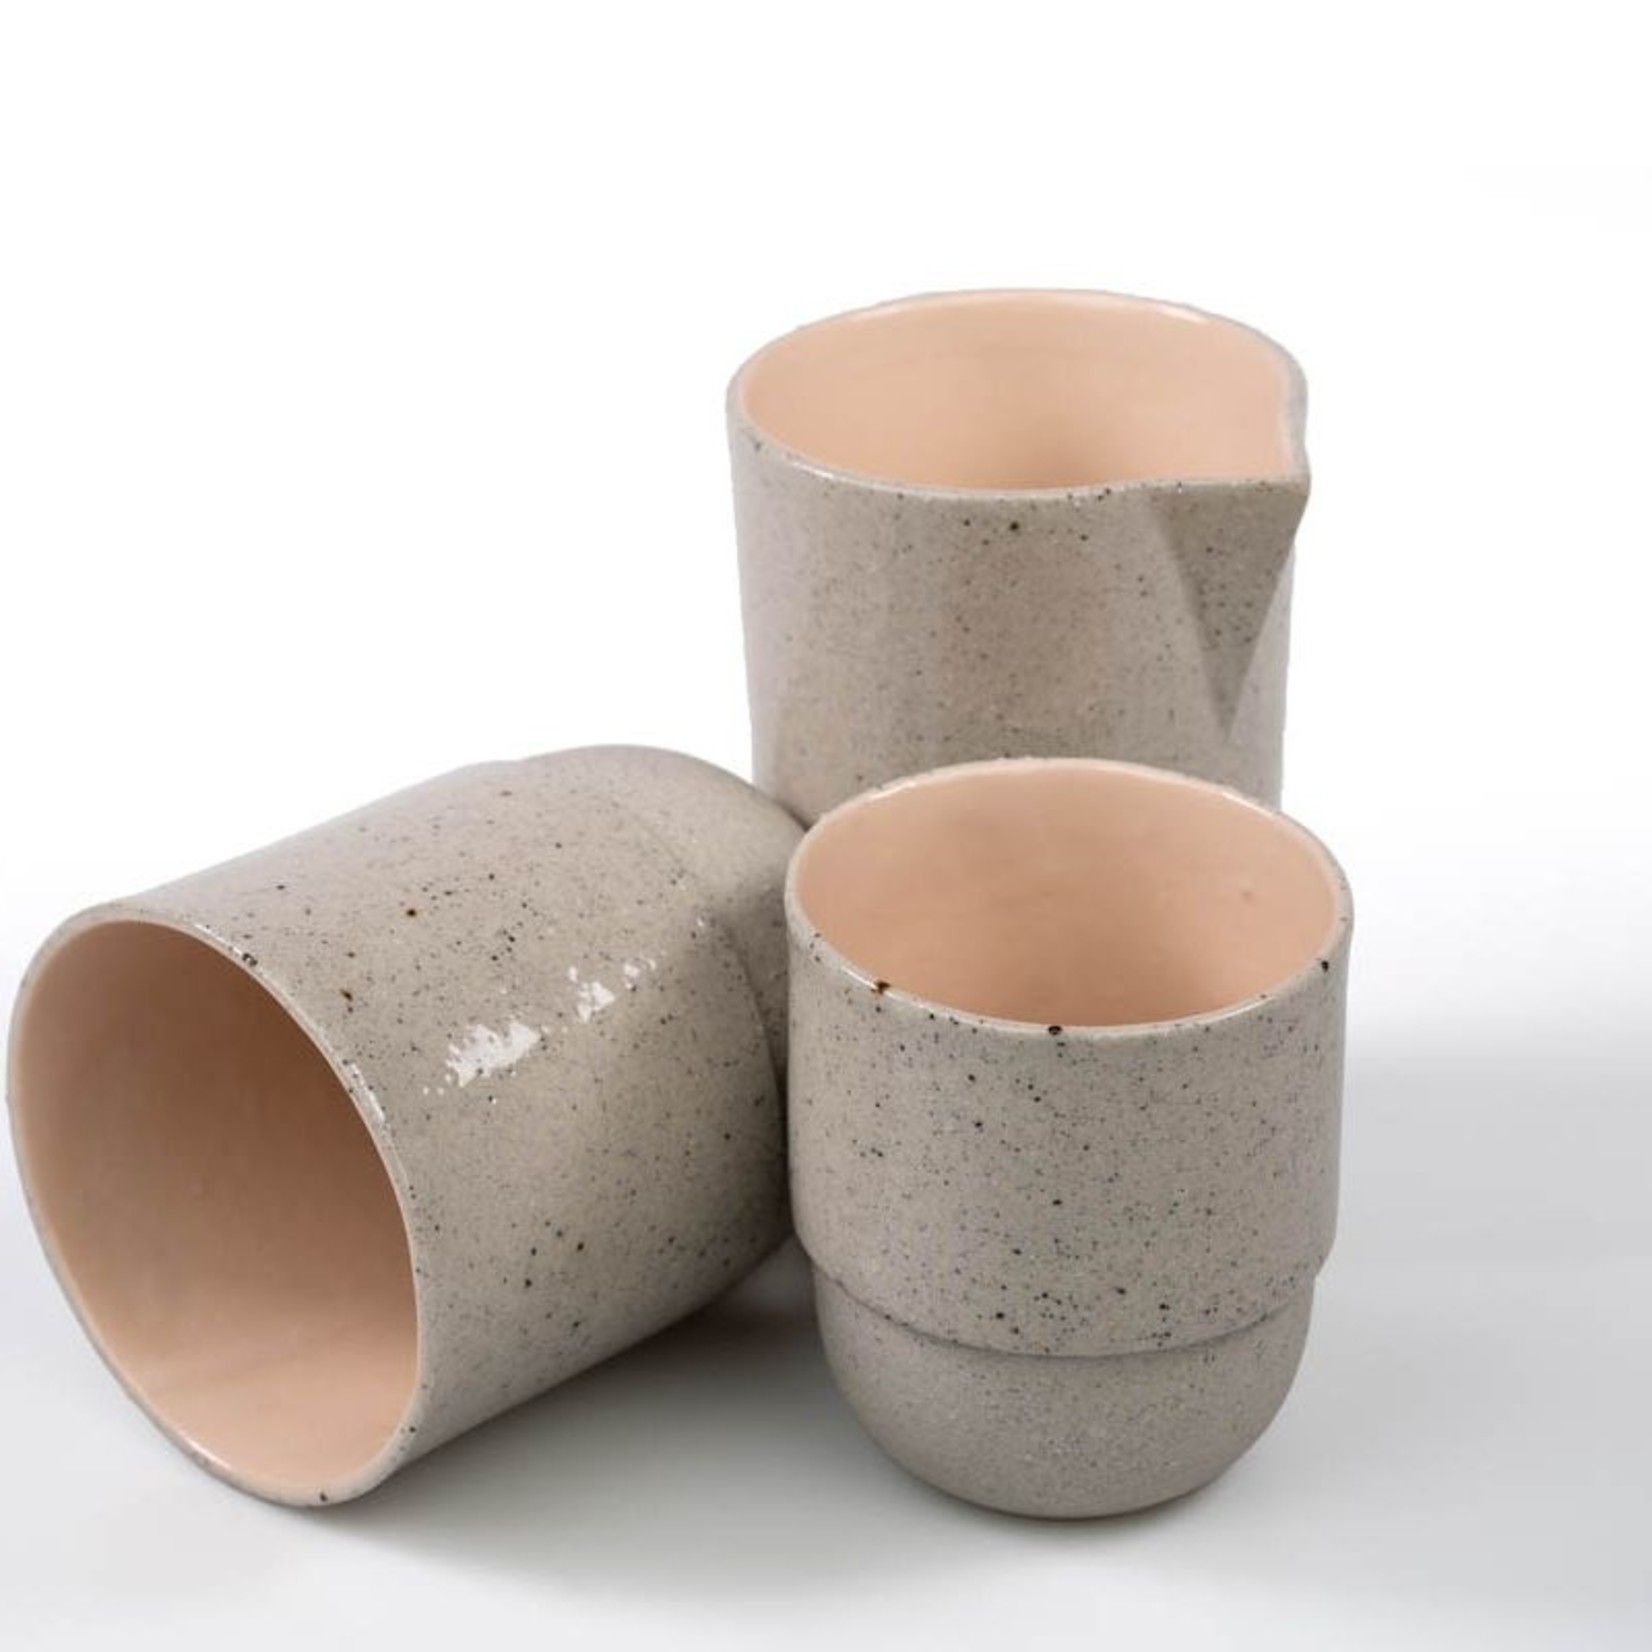 form keramiek form - melkkannetje tijntje  - limited edition zand